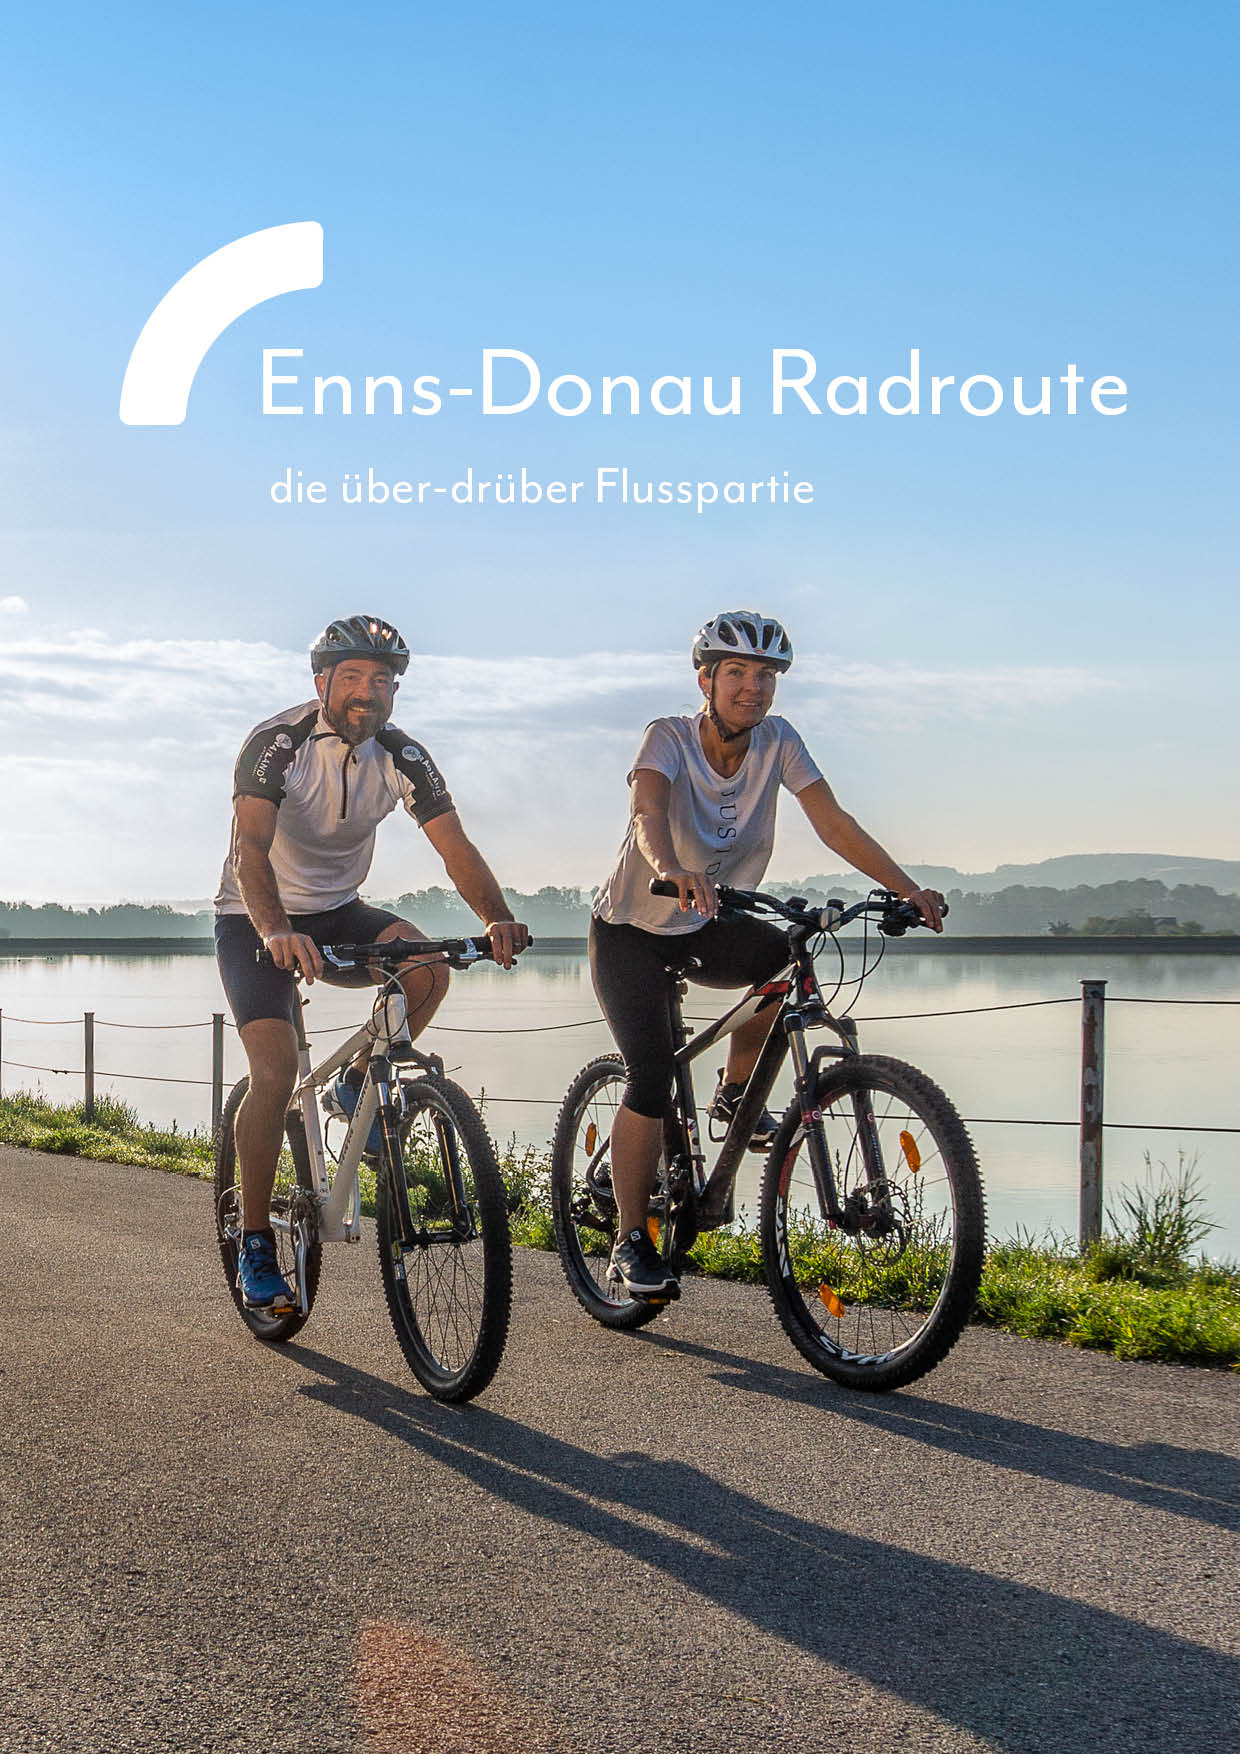 Enns-Donau Radroute